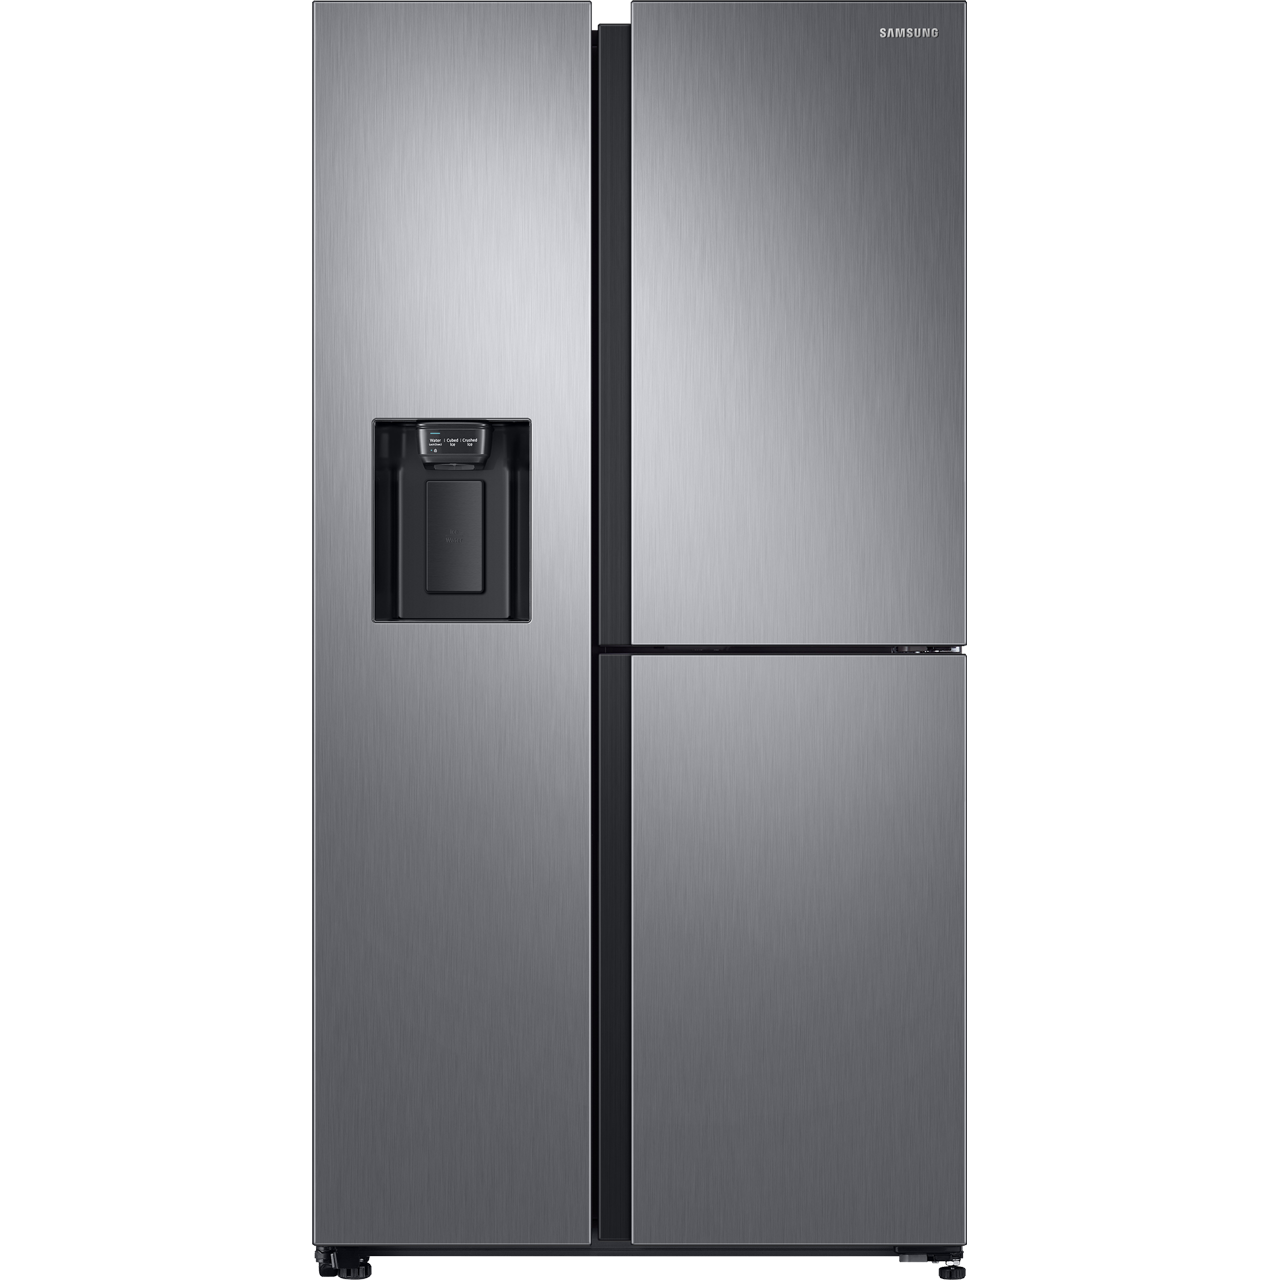 Samsung RS8000 RS68N8670S9 American Fridge Freezer Review